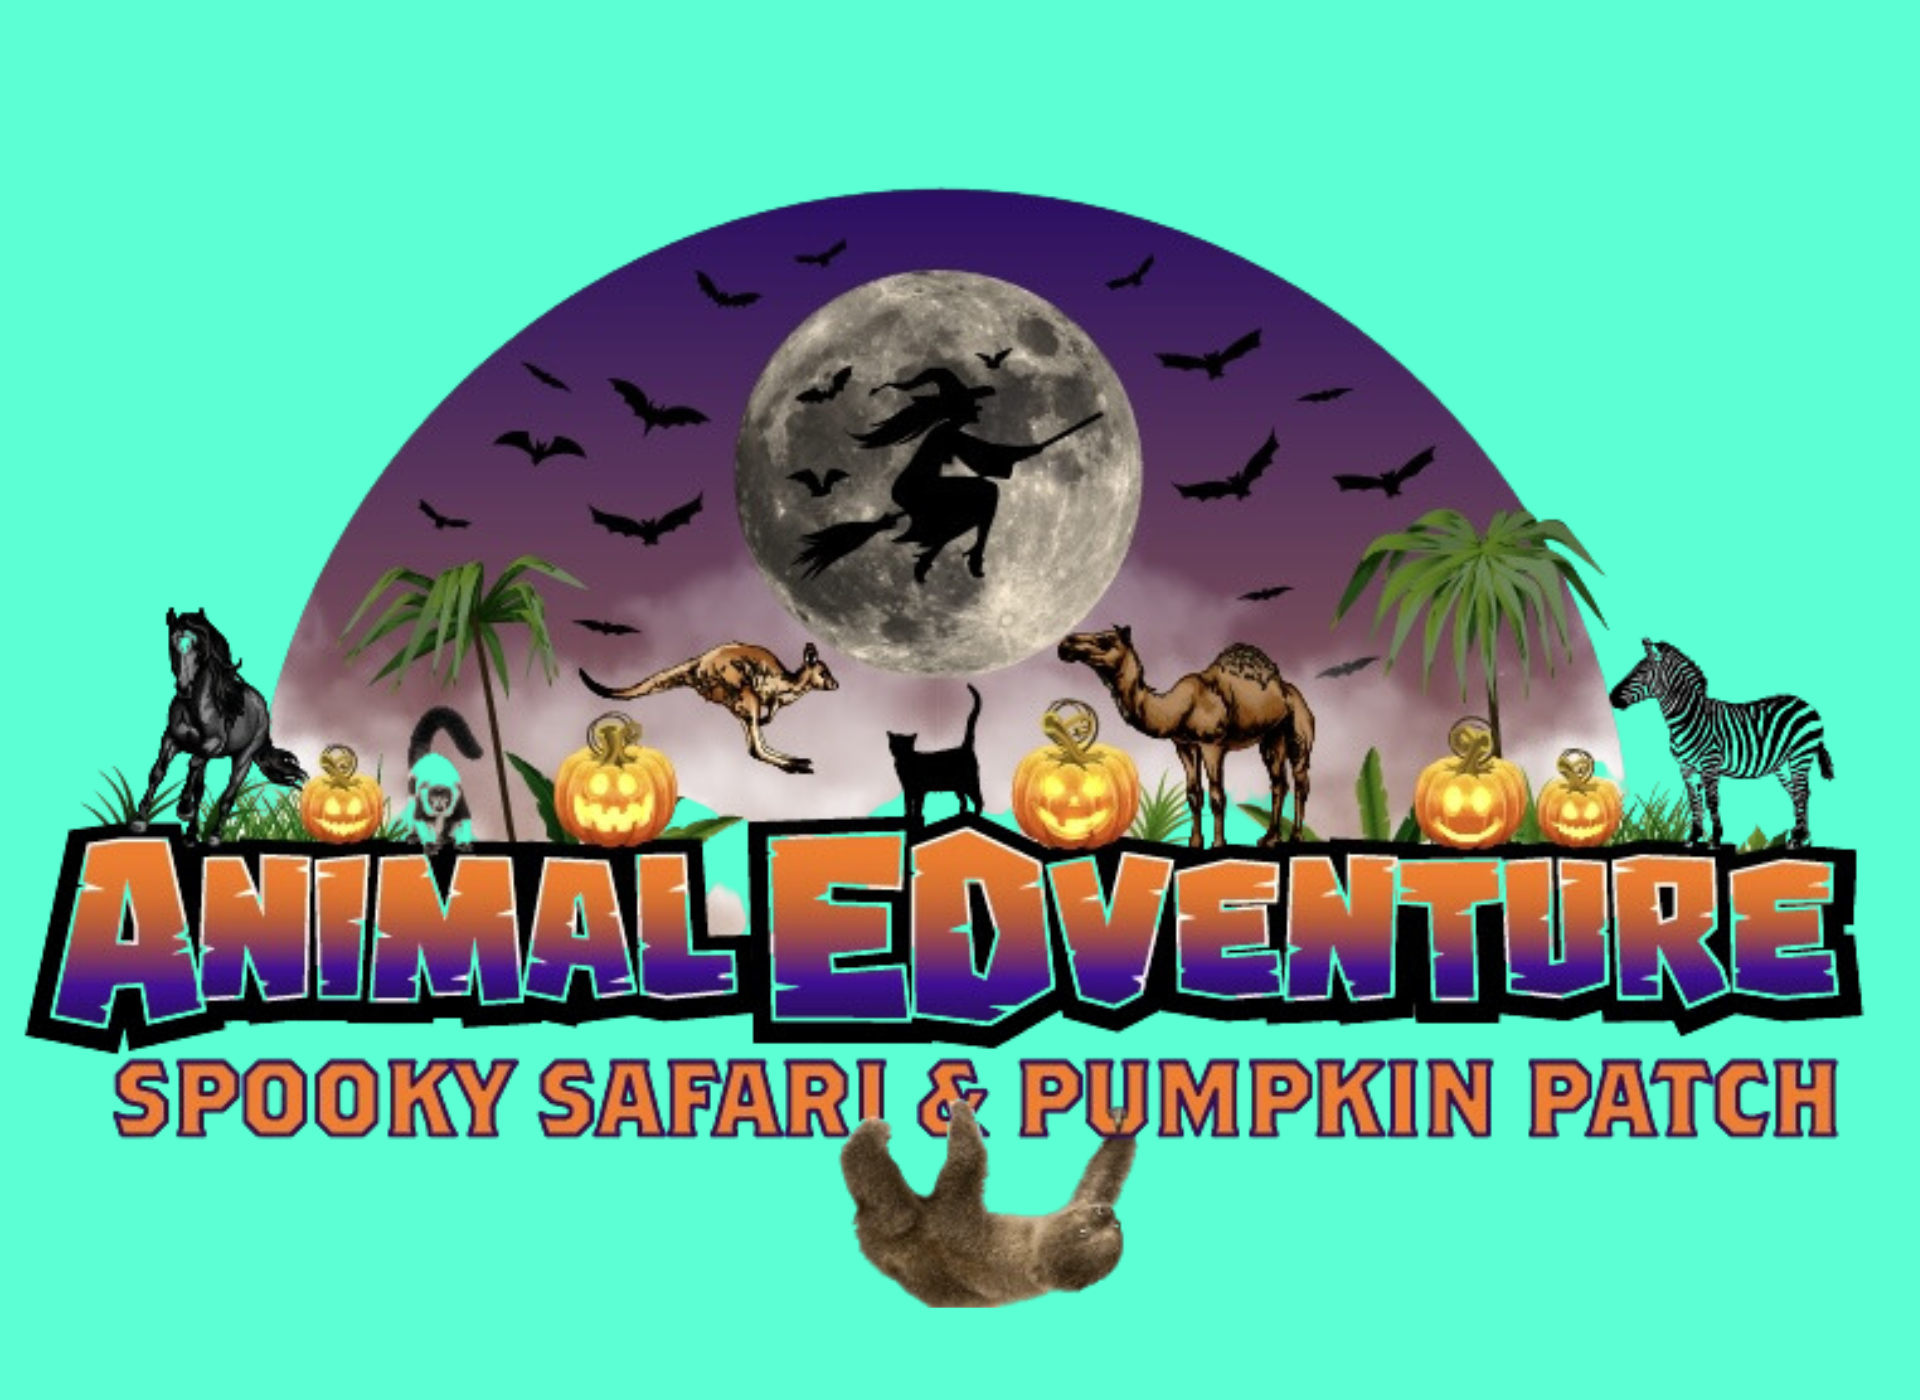 Animal Edventures Park - Spooky Safari Tour - Private Pumpkin Patches